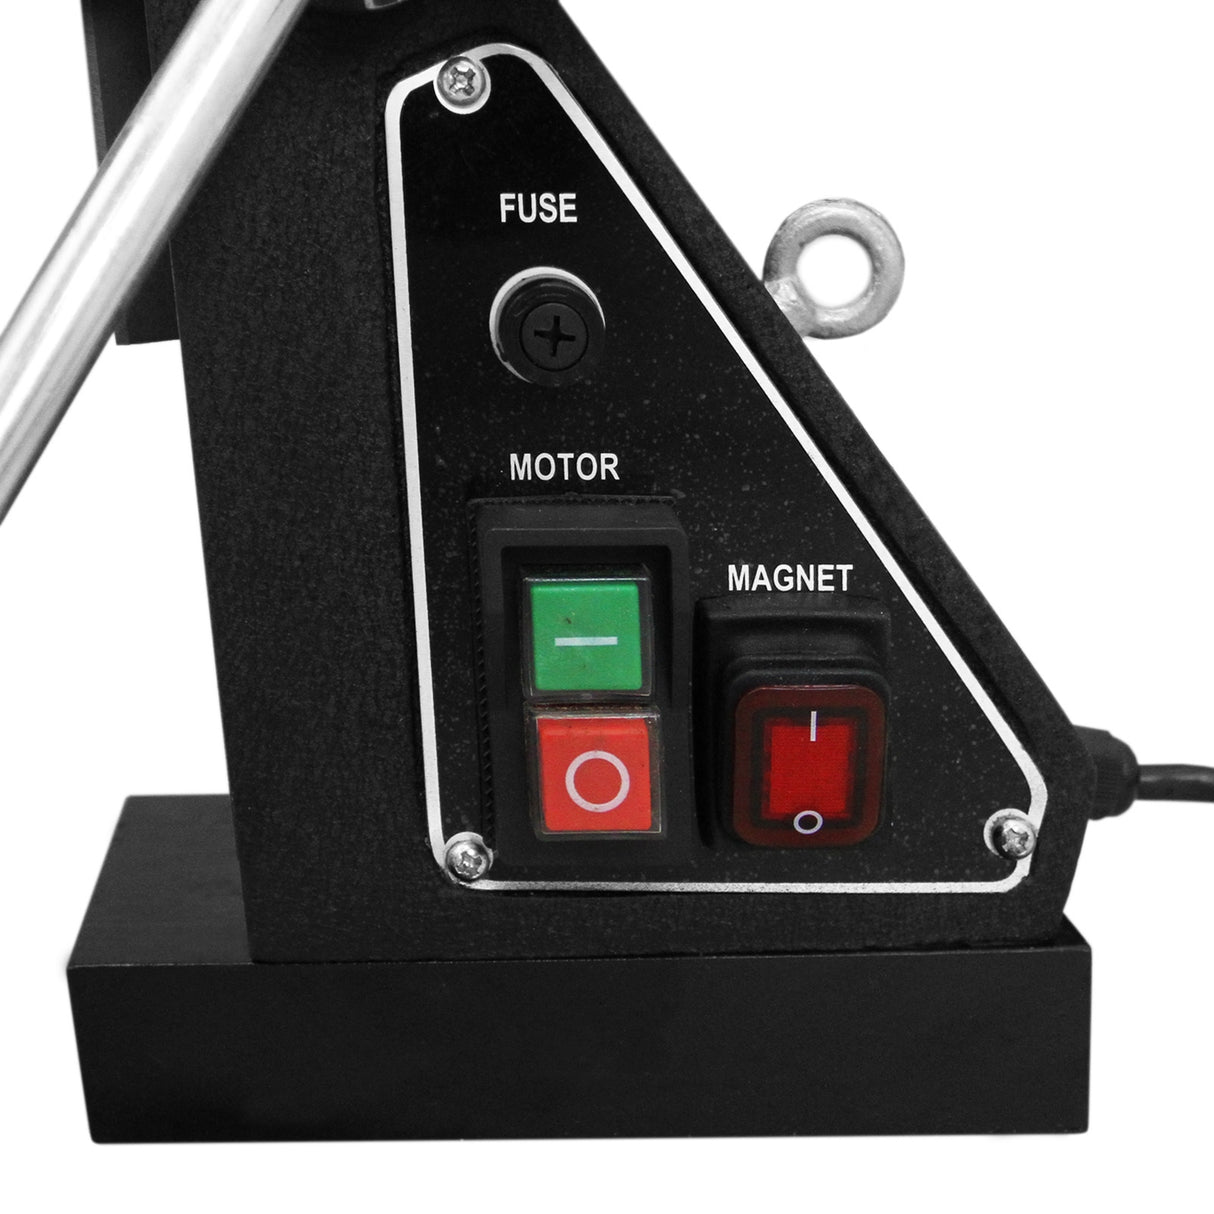 T-Mech Magnetic Drill Press